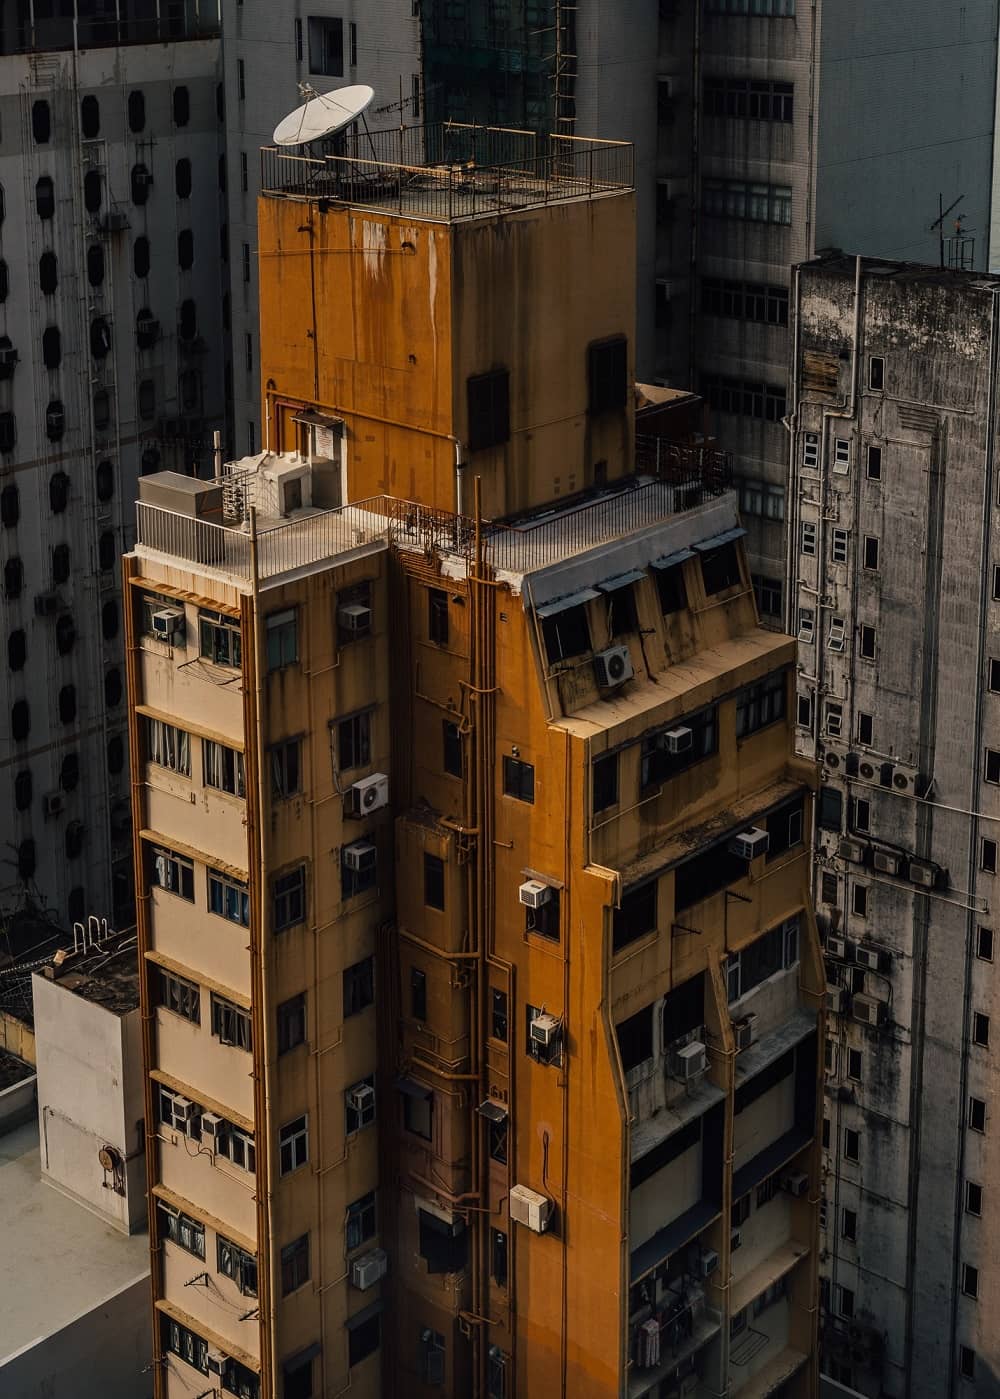 Hong Kong Street Photography by Daniel Muller